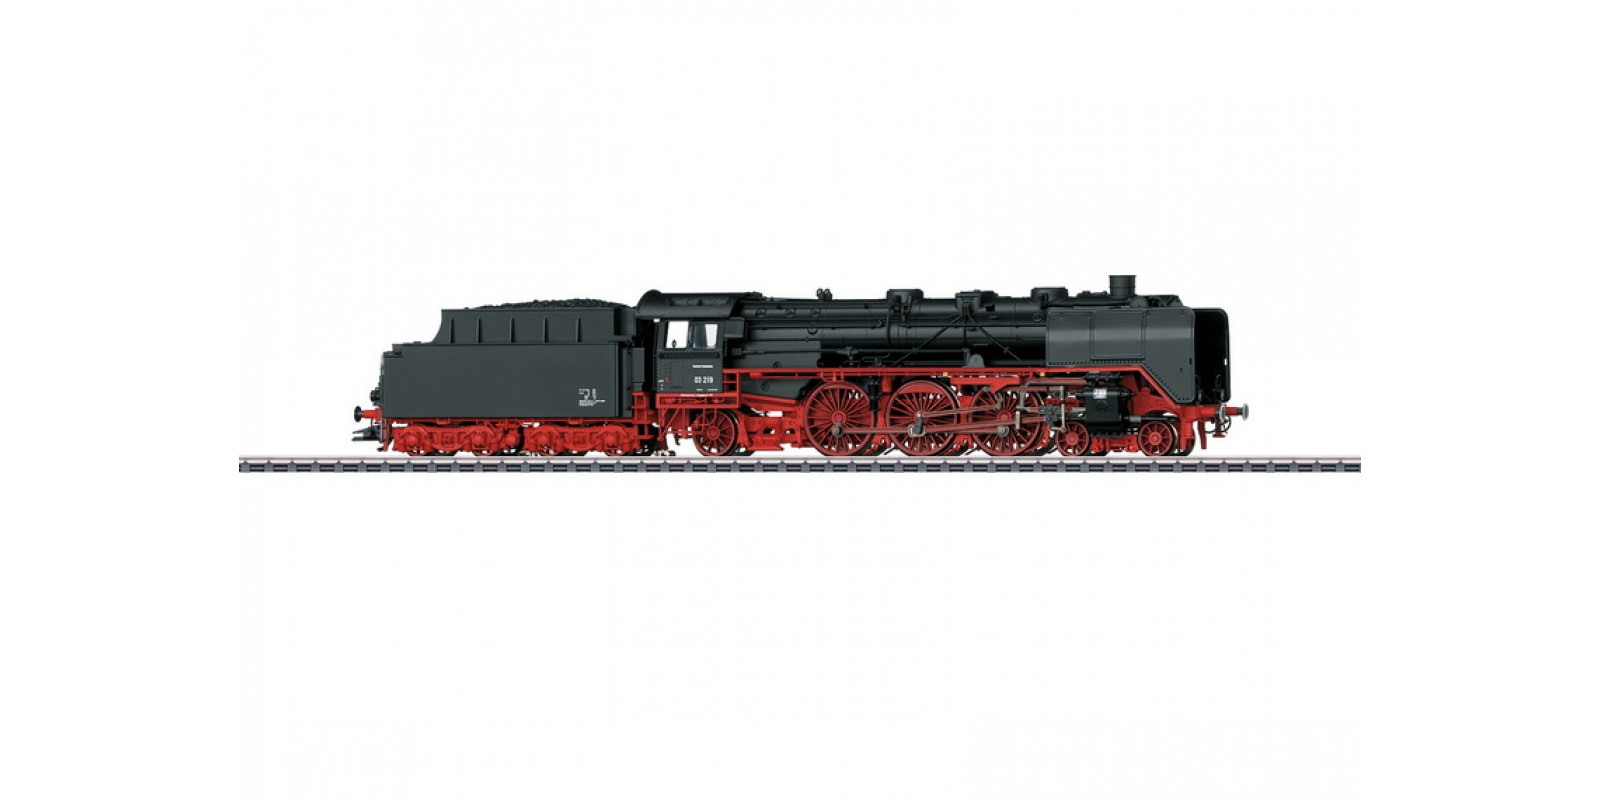  37949 Class 03 Passenger Steam Locomotive with a Tender